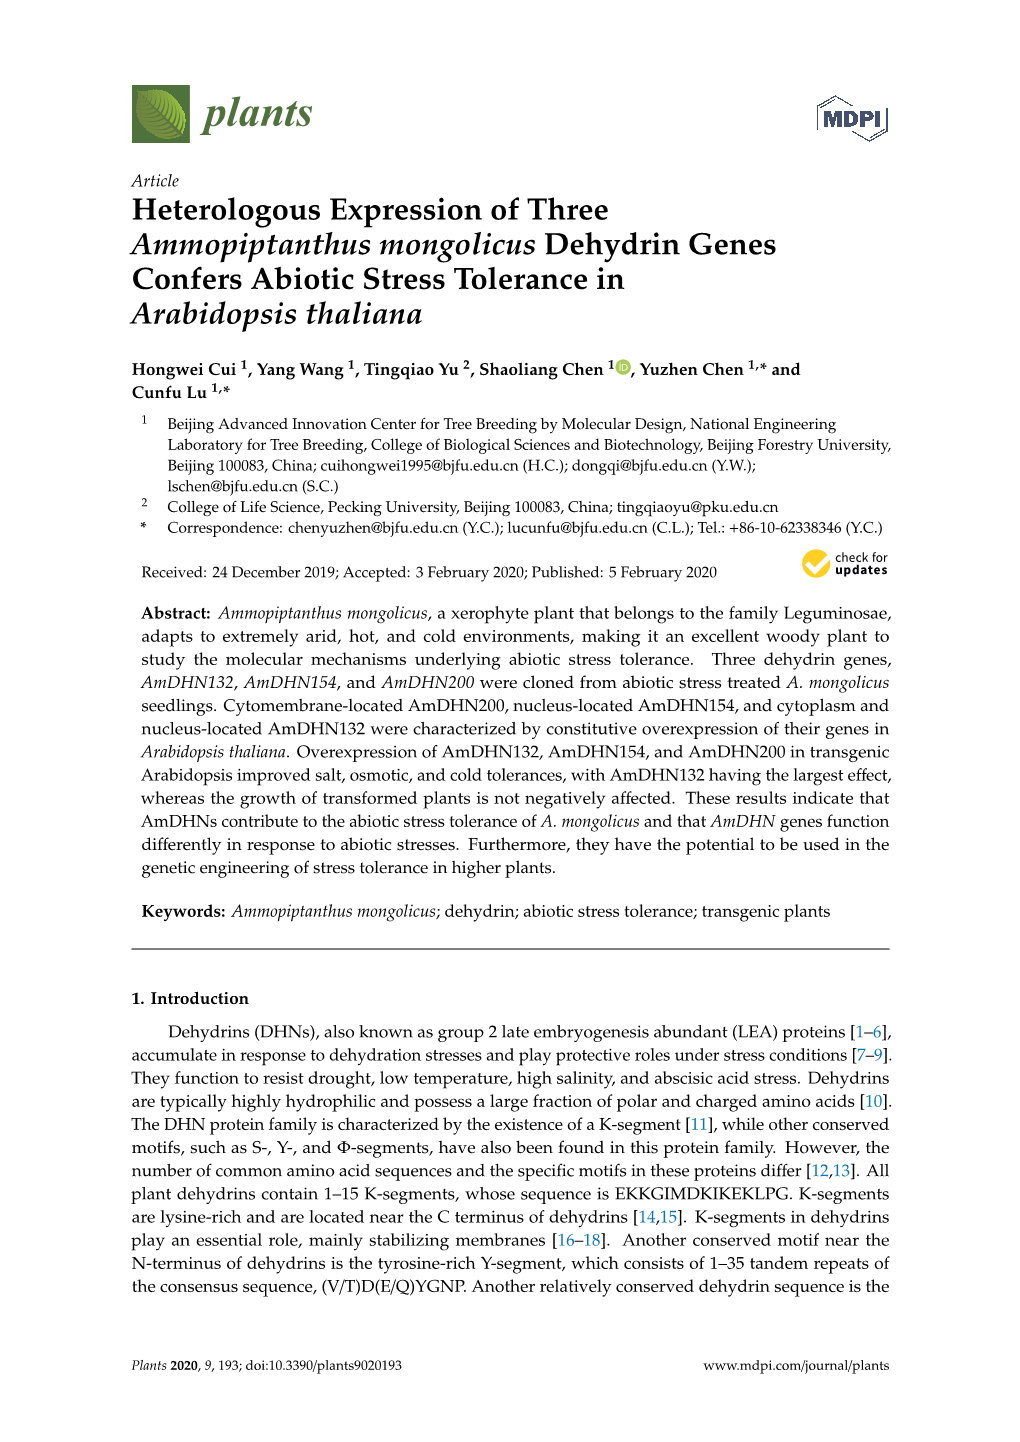 Heterologous Expression of Three Ammopiptanthus Mongolicus Dehydrin Genes Confers Abiotic Stress Tolerance in Arabidopsis Thaliana